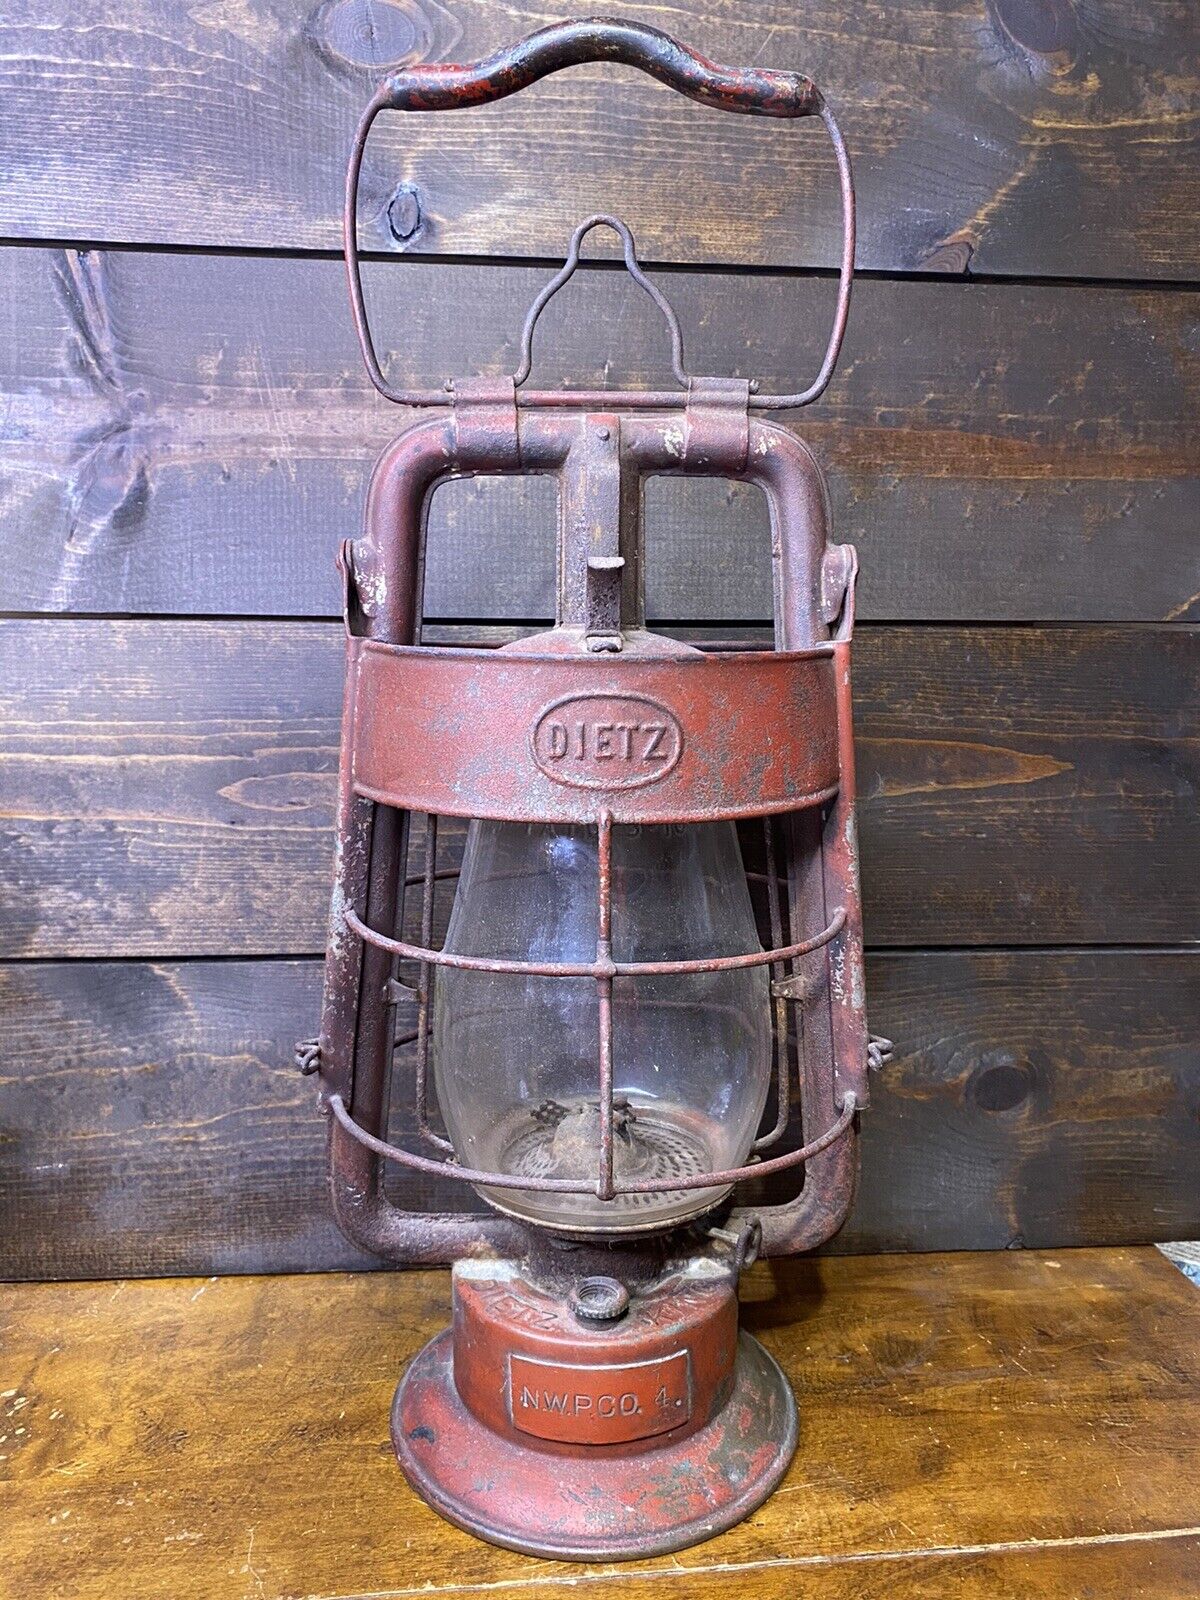 Vtg Dietz King Fire Dept Kerosene Lantern W/n.w.p. Rr Co. #4 Tag - Brass Painted